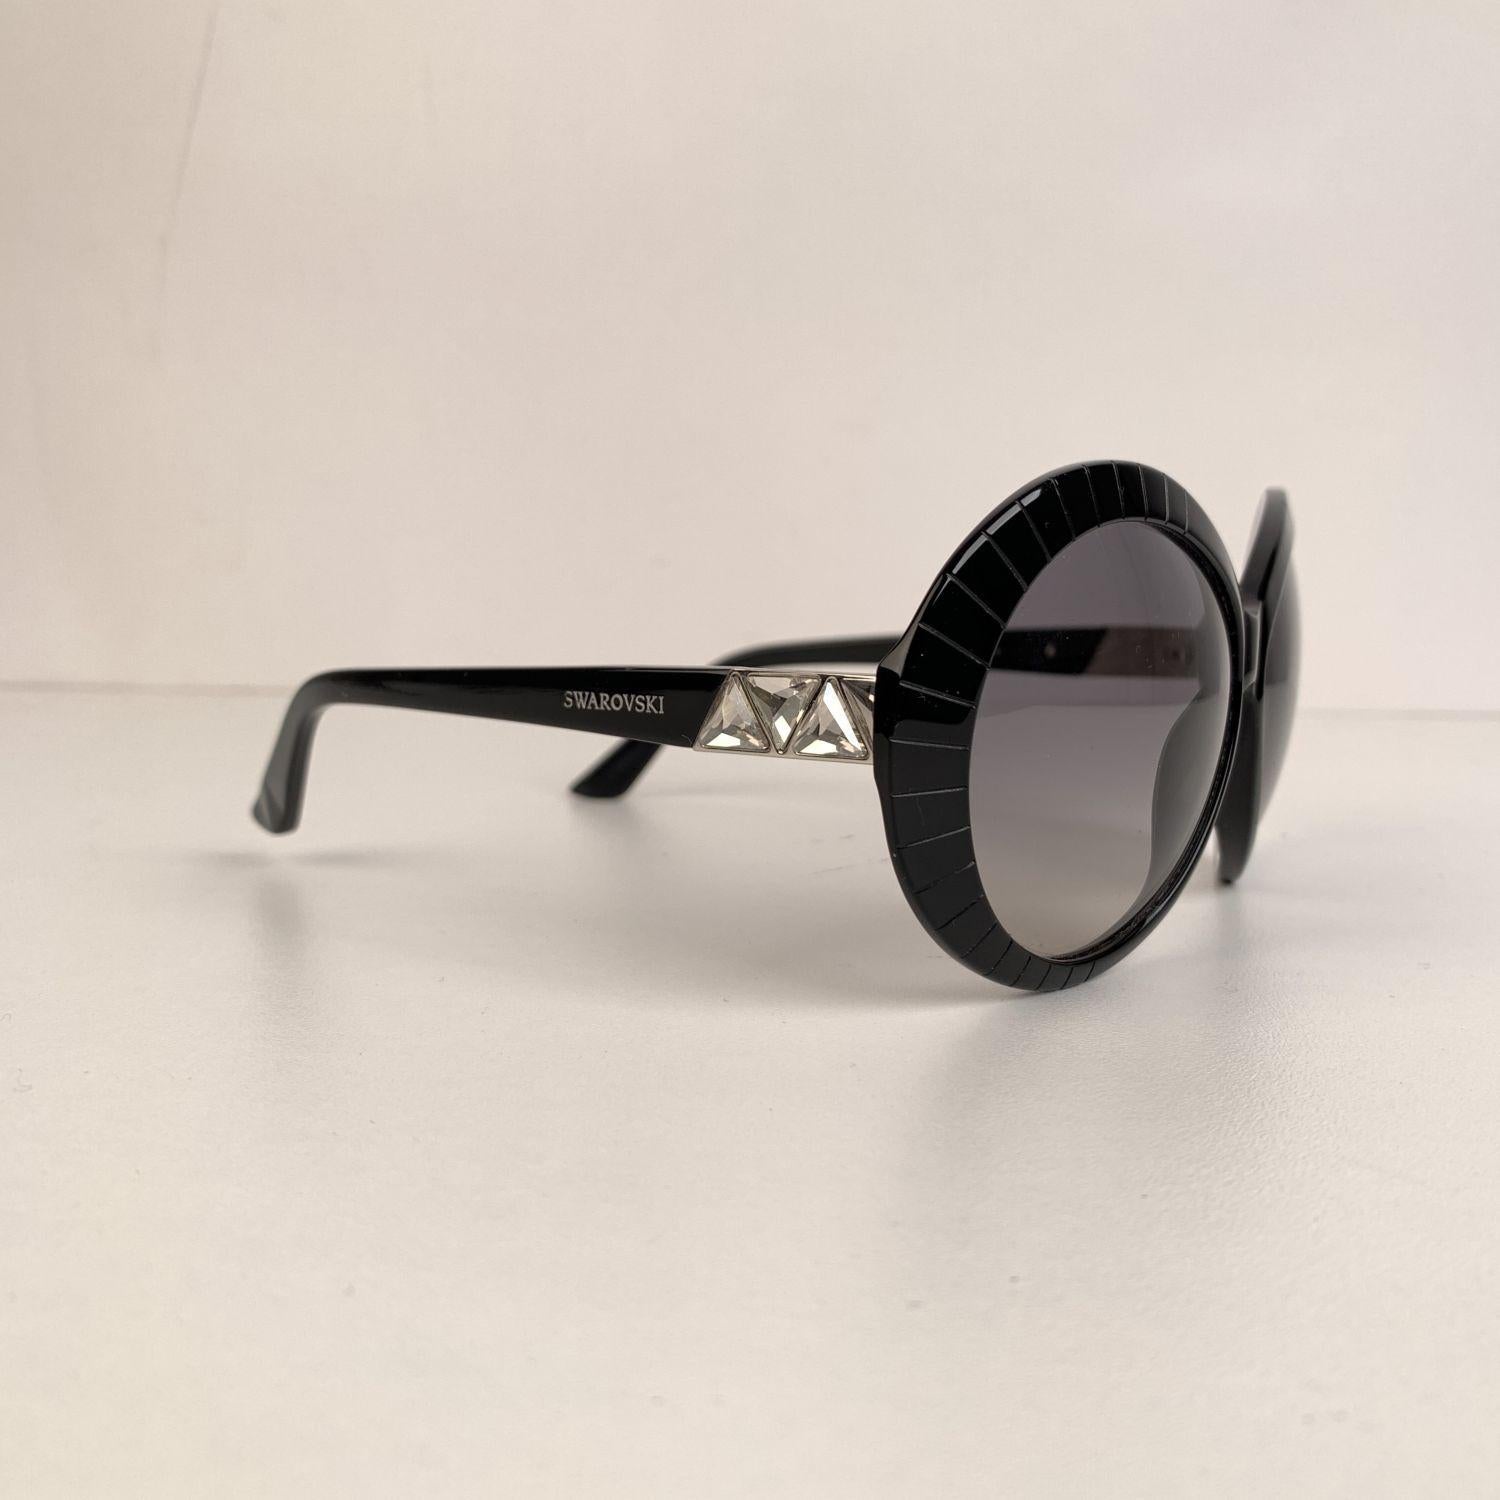 Swarovski Black Round Sunglasses Dolce SW71 01 B 140 mm with Crystals 1